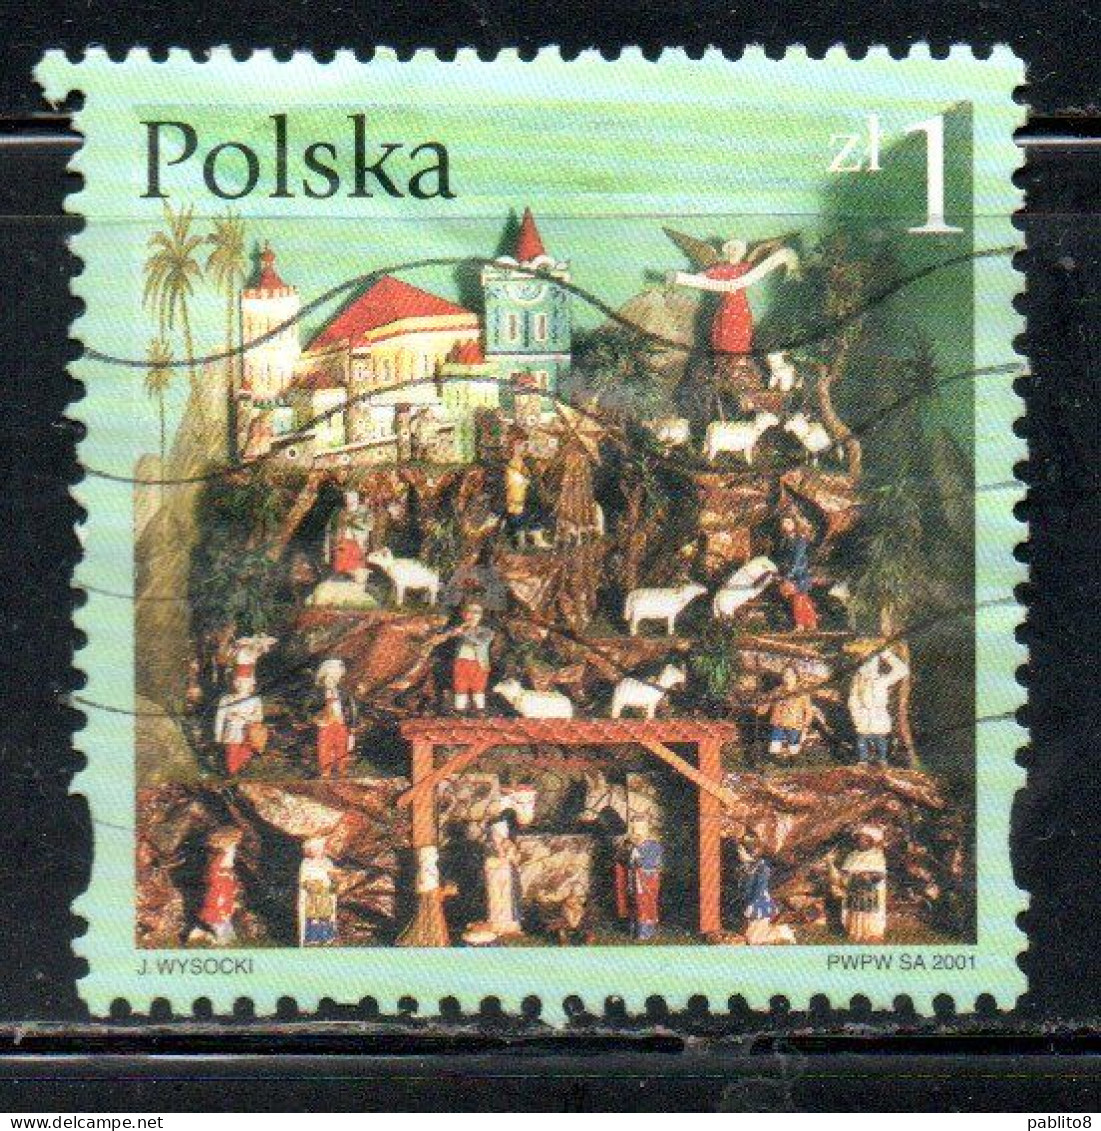 POLONIA POLAND POLSKA 2001 EASTER WOMEN AT EMPTY TOMB  1z USED USATO OBLITERE' - Usati